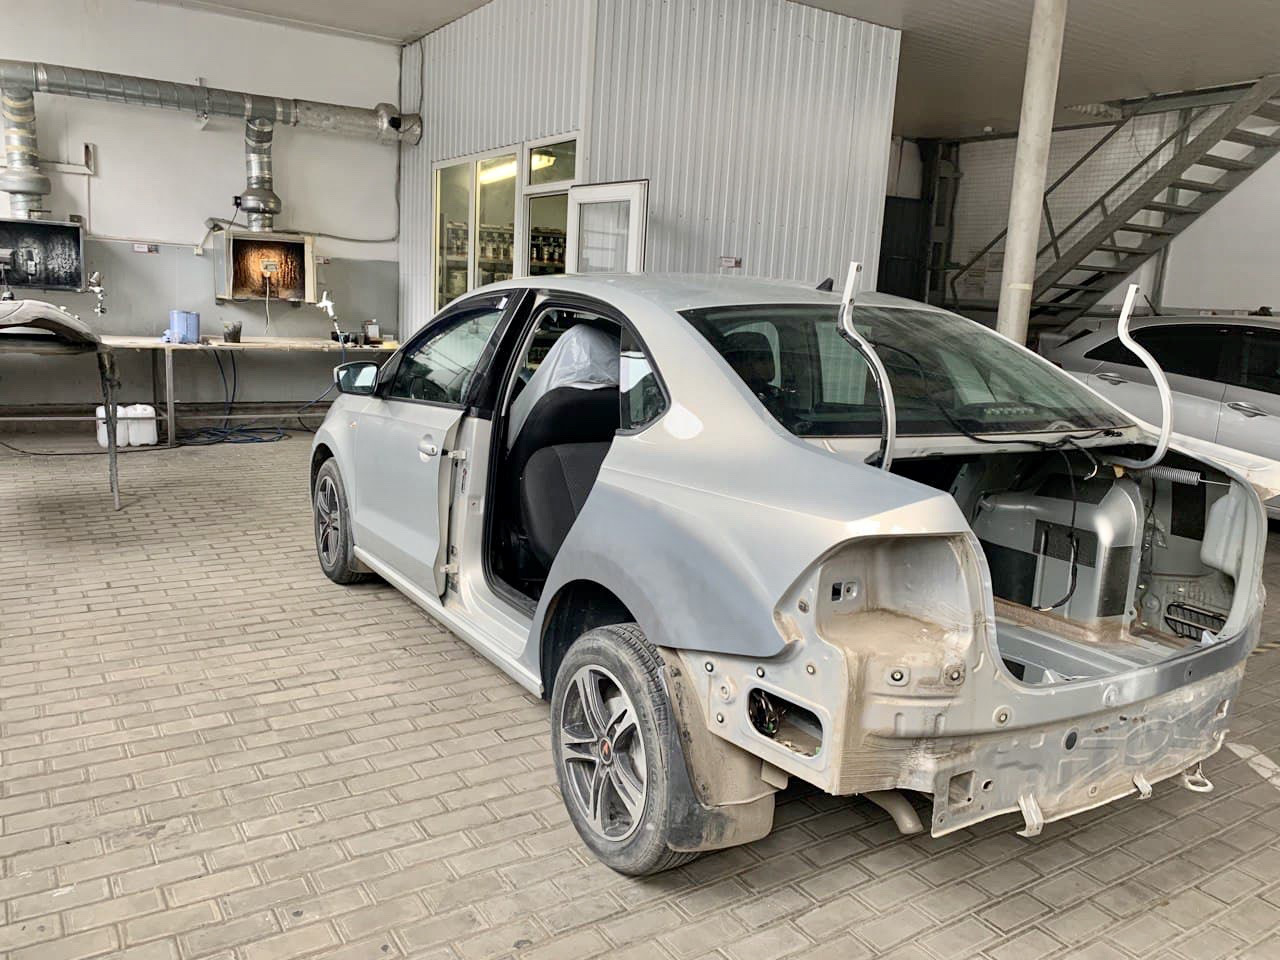 Ремонт volkswagen года. Кузовной ремонт Volkswagen.